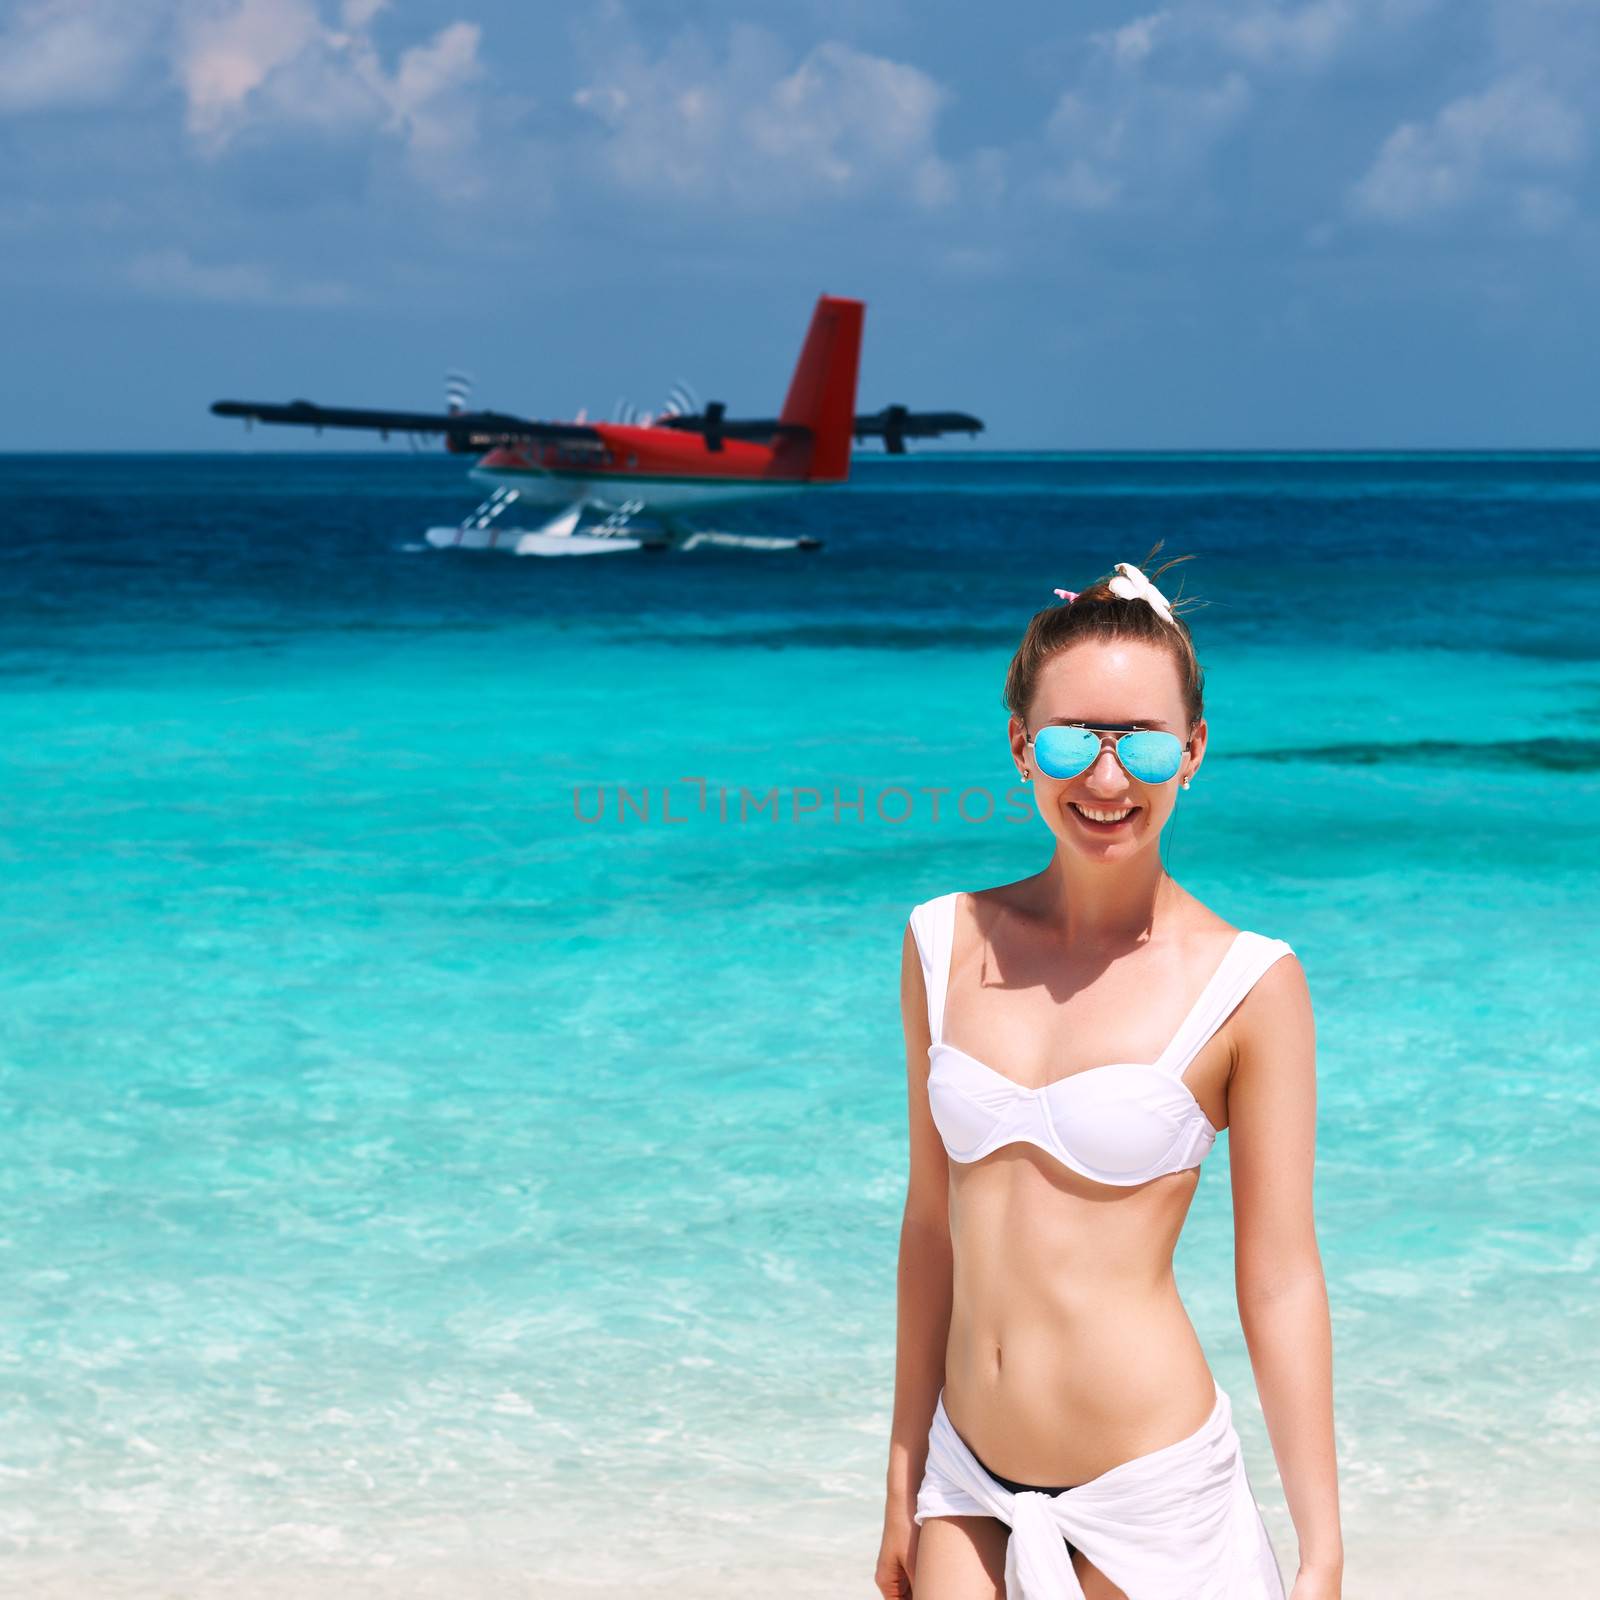 Woman in bikini at tropical beach. Seaplane at background.